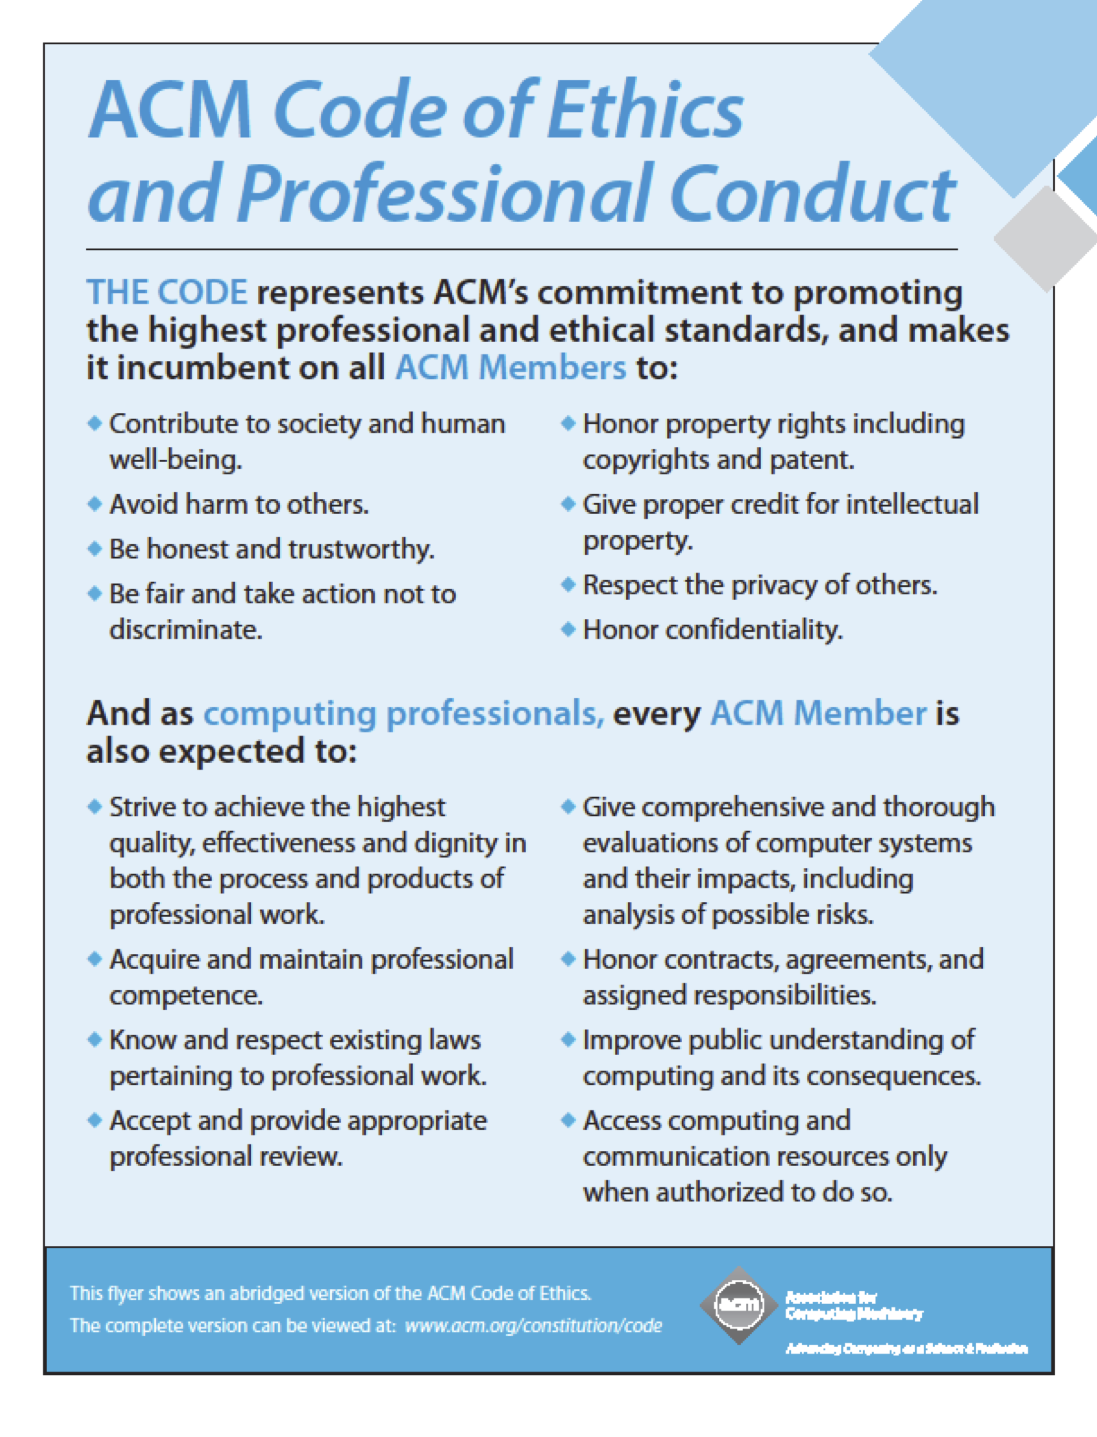 ACM Code of Ethics flyer